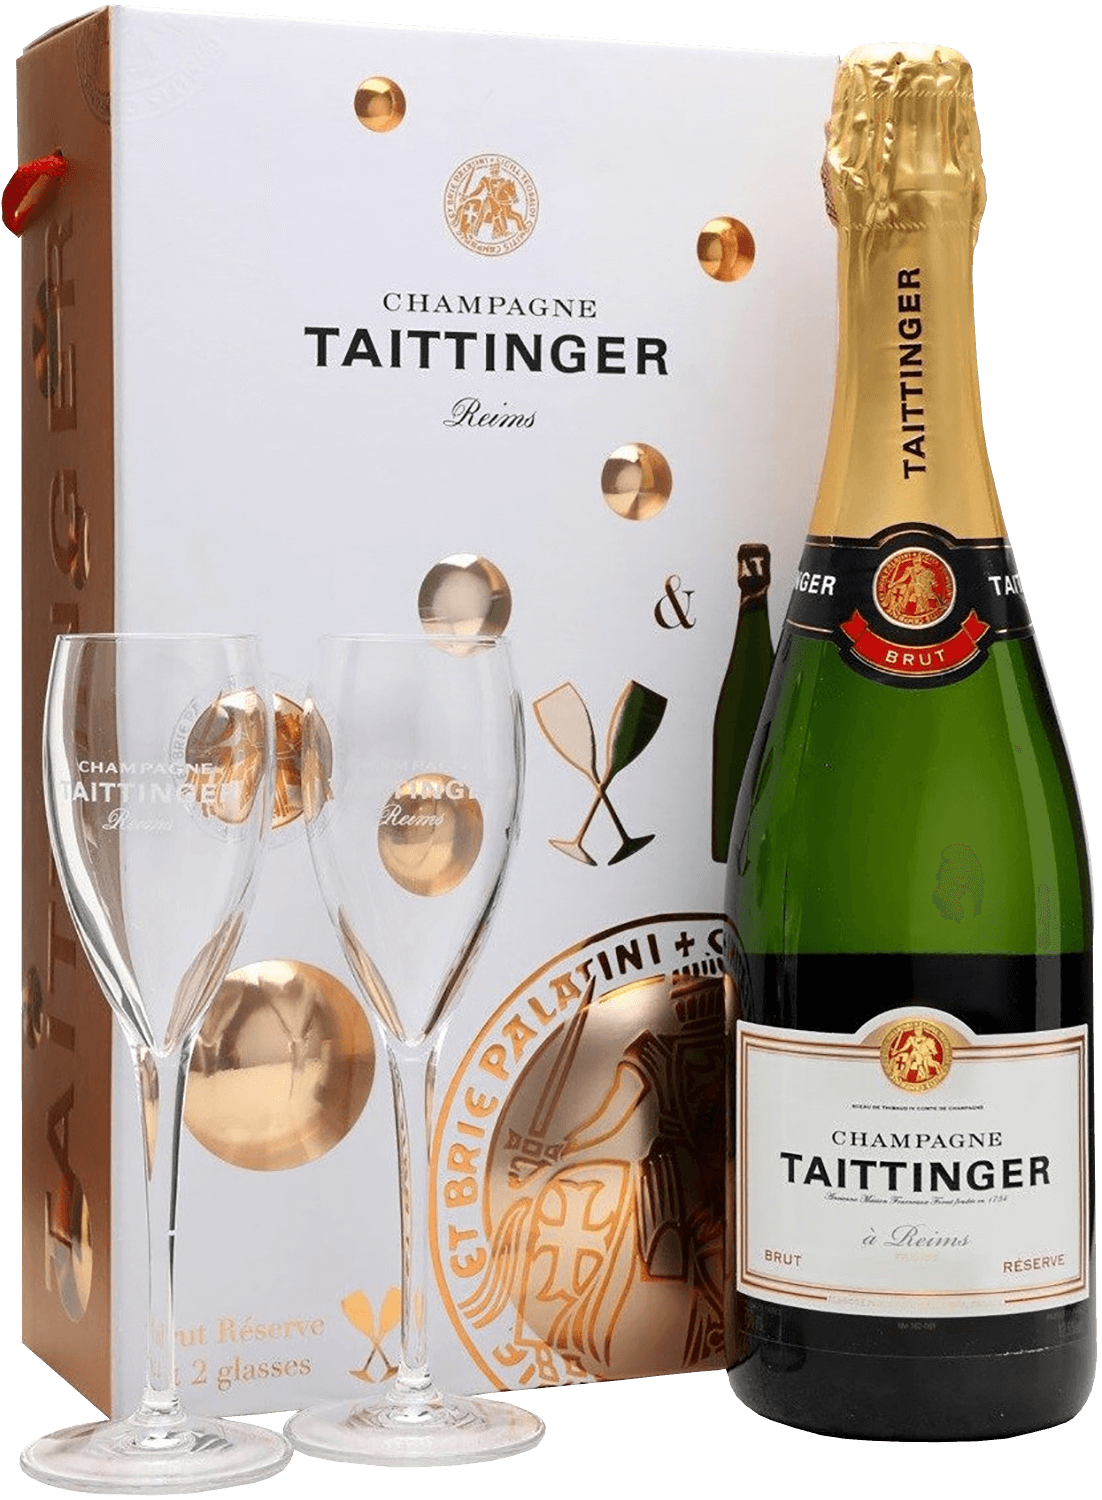 Taittinger Brut Reserve Champagne AOC (gift box) piper heidsieck year of the tiger brut champagne aoc gift box